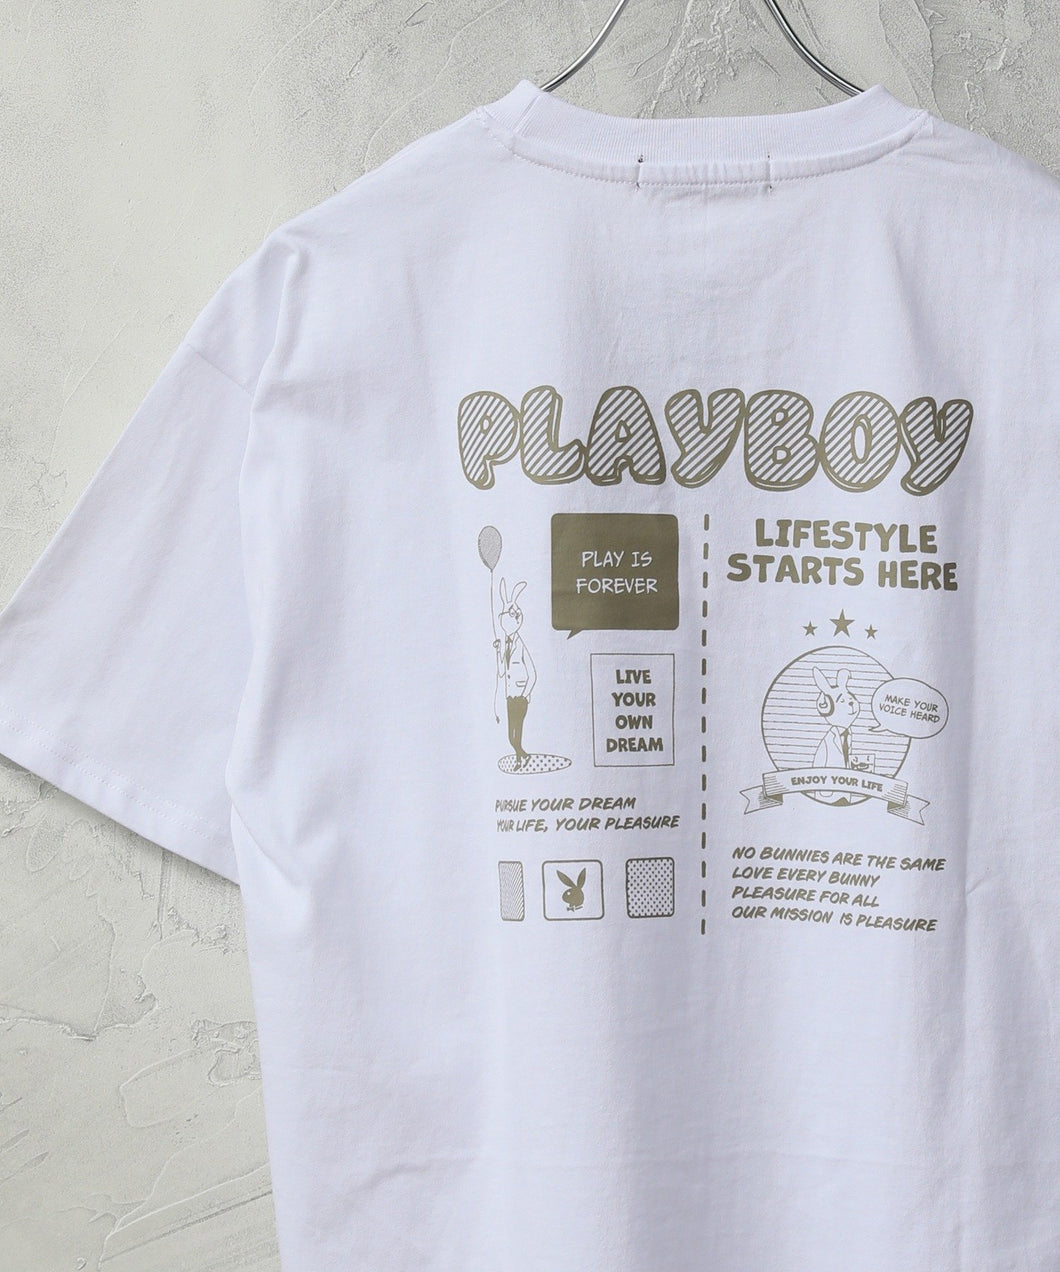 【PLAYBOY/プレイボーイ】クラシックアートワーク プリント 半袖Tシャツ